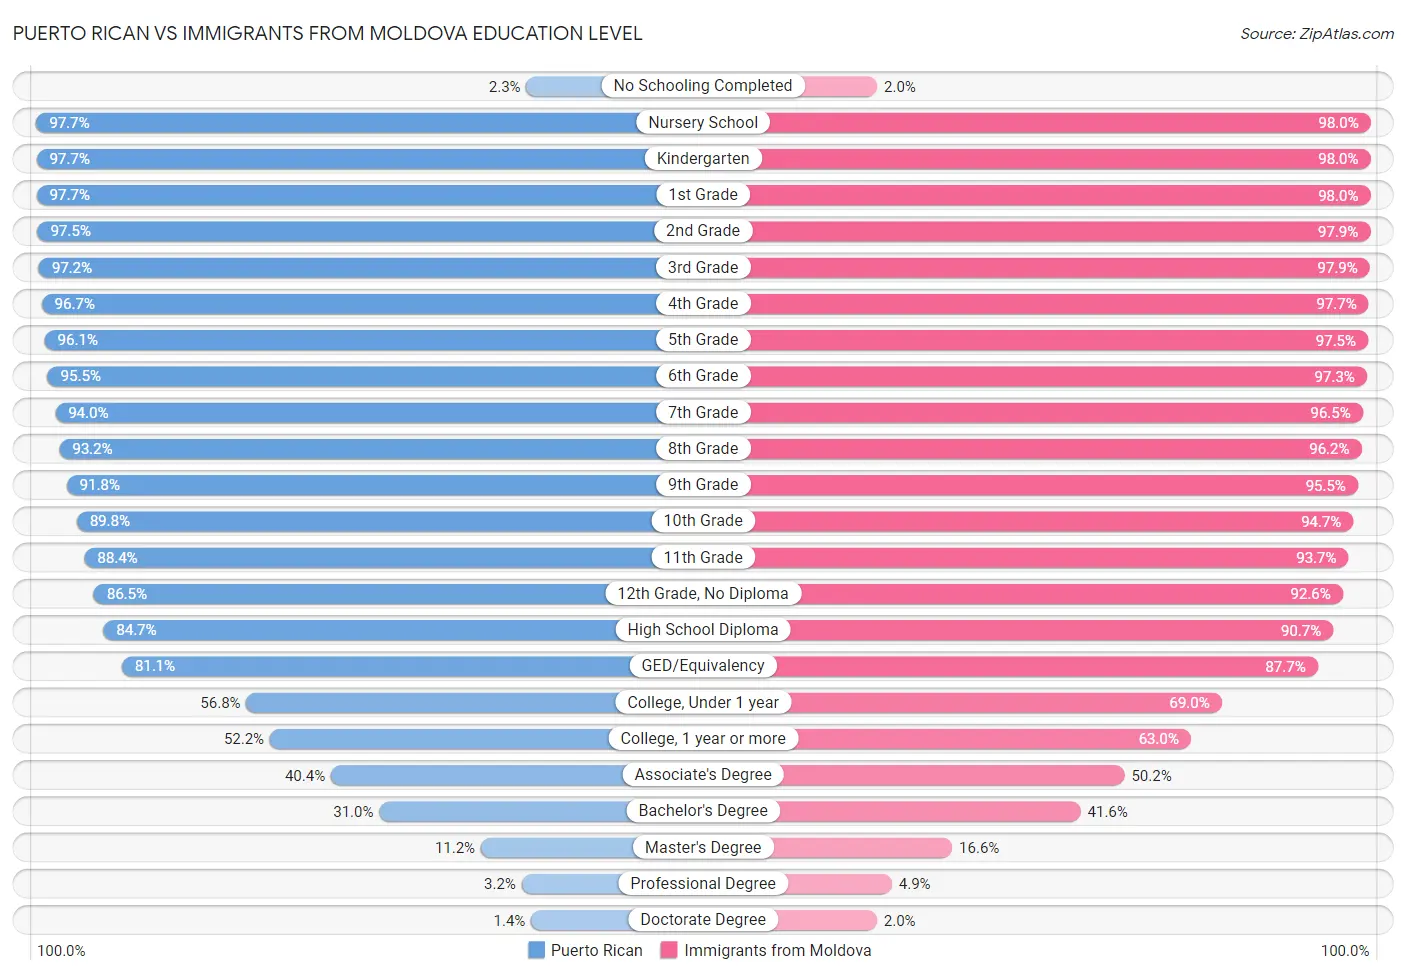 Puerto Rican vs Immigrants from Moldova Education Level